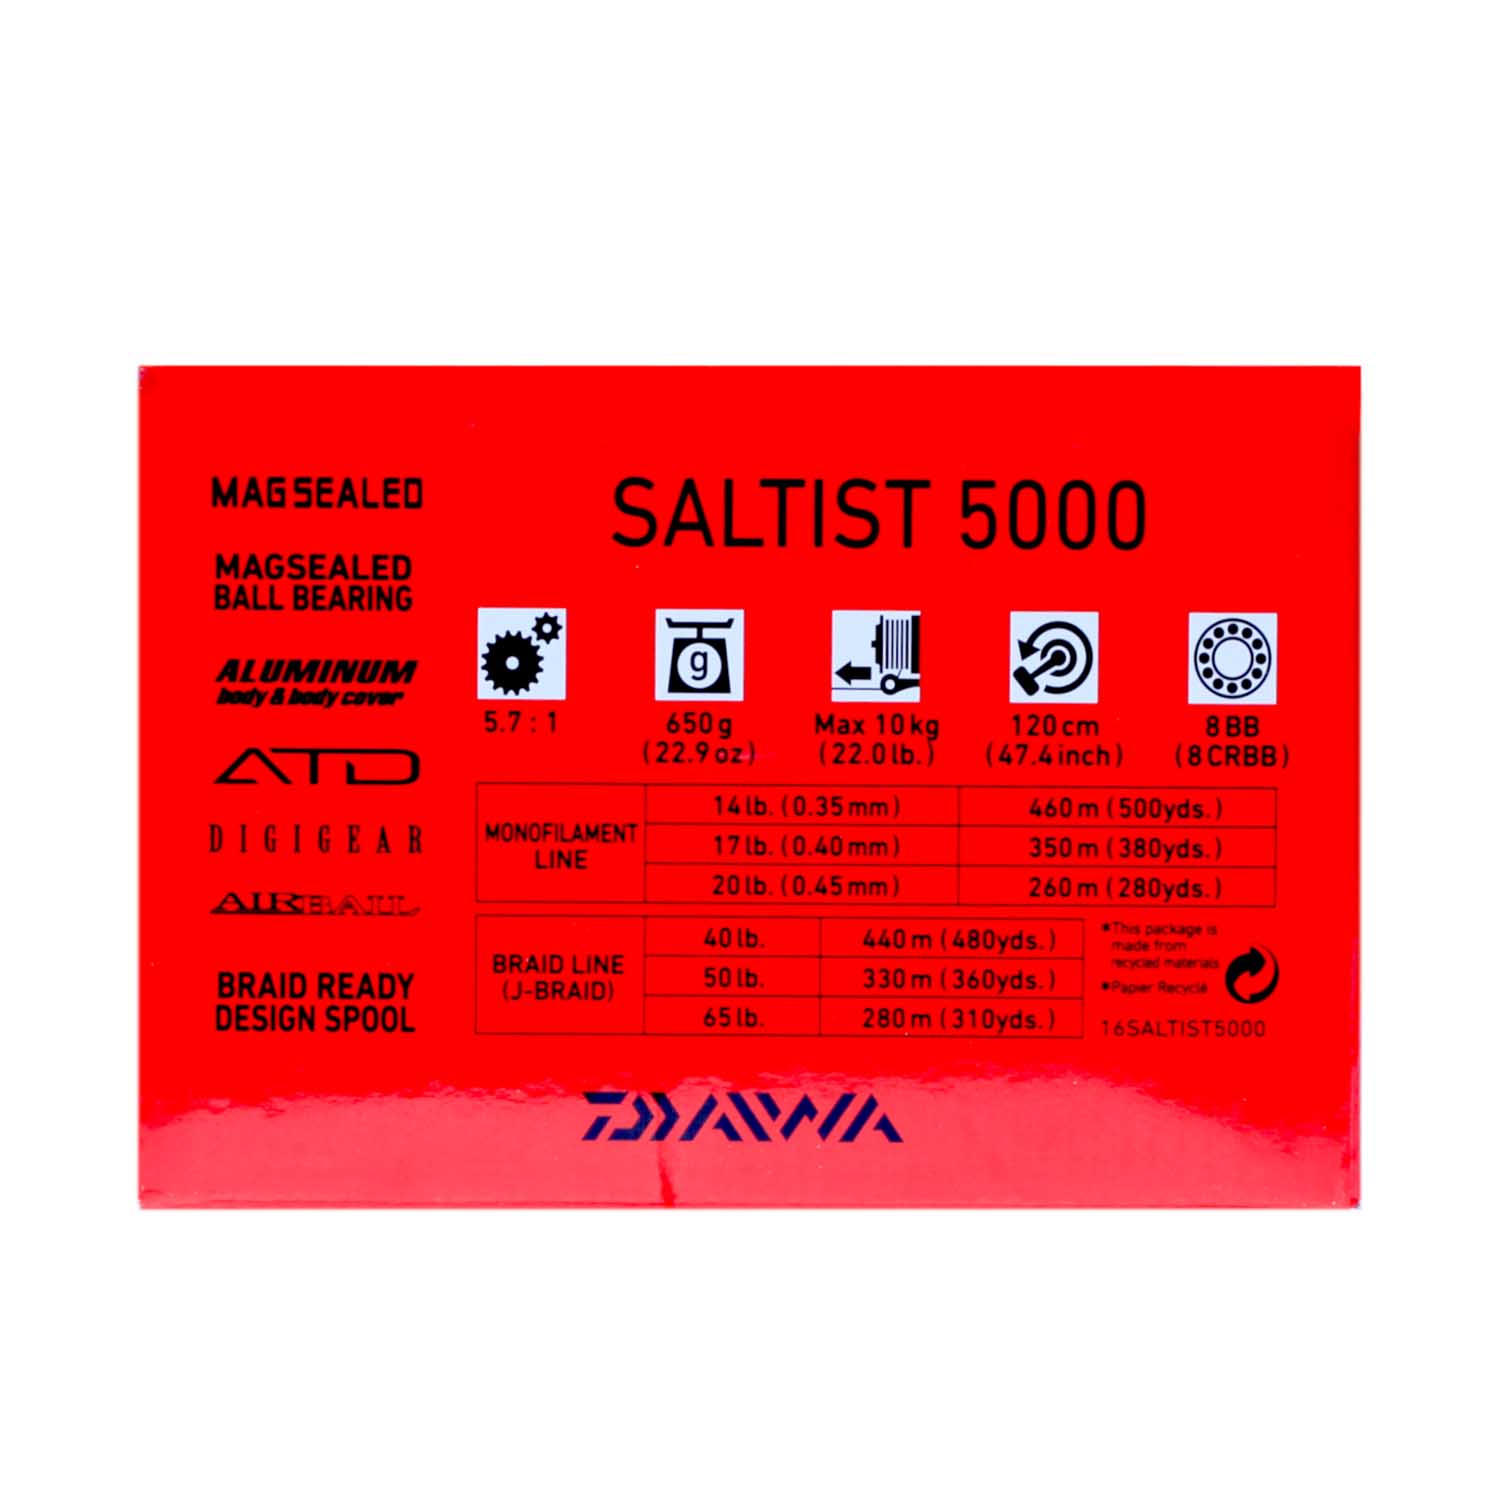 Daiwa Saltist 5000 Spinning Reel Showspace